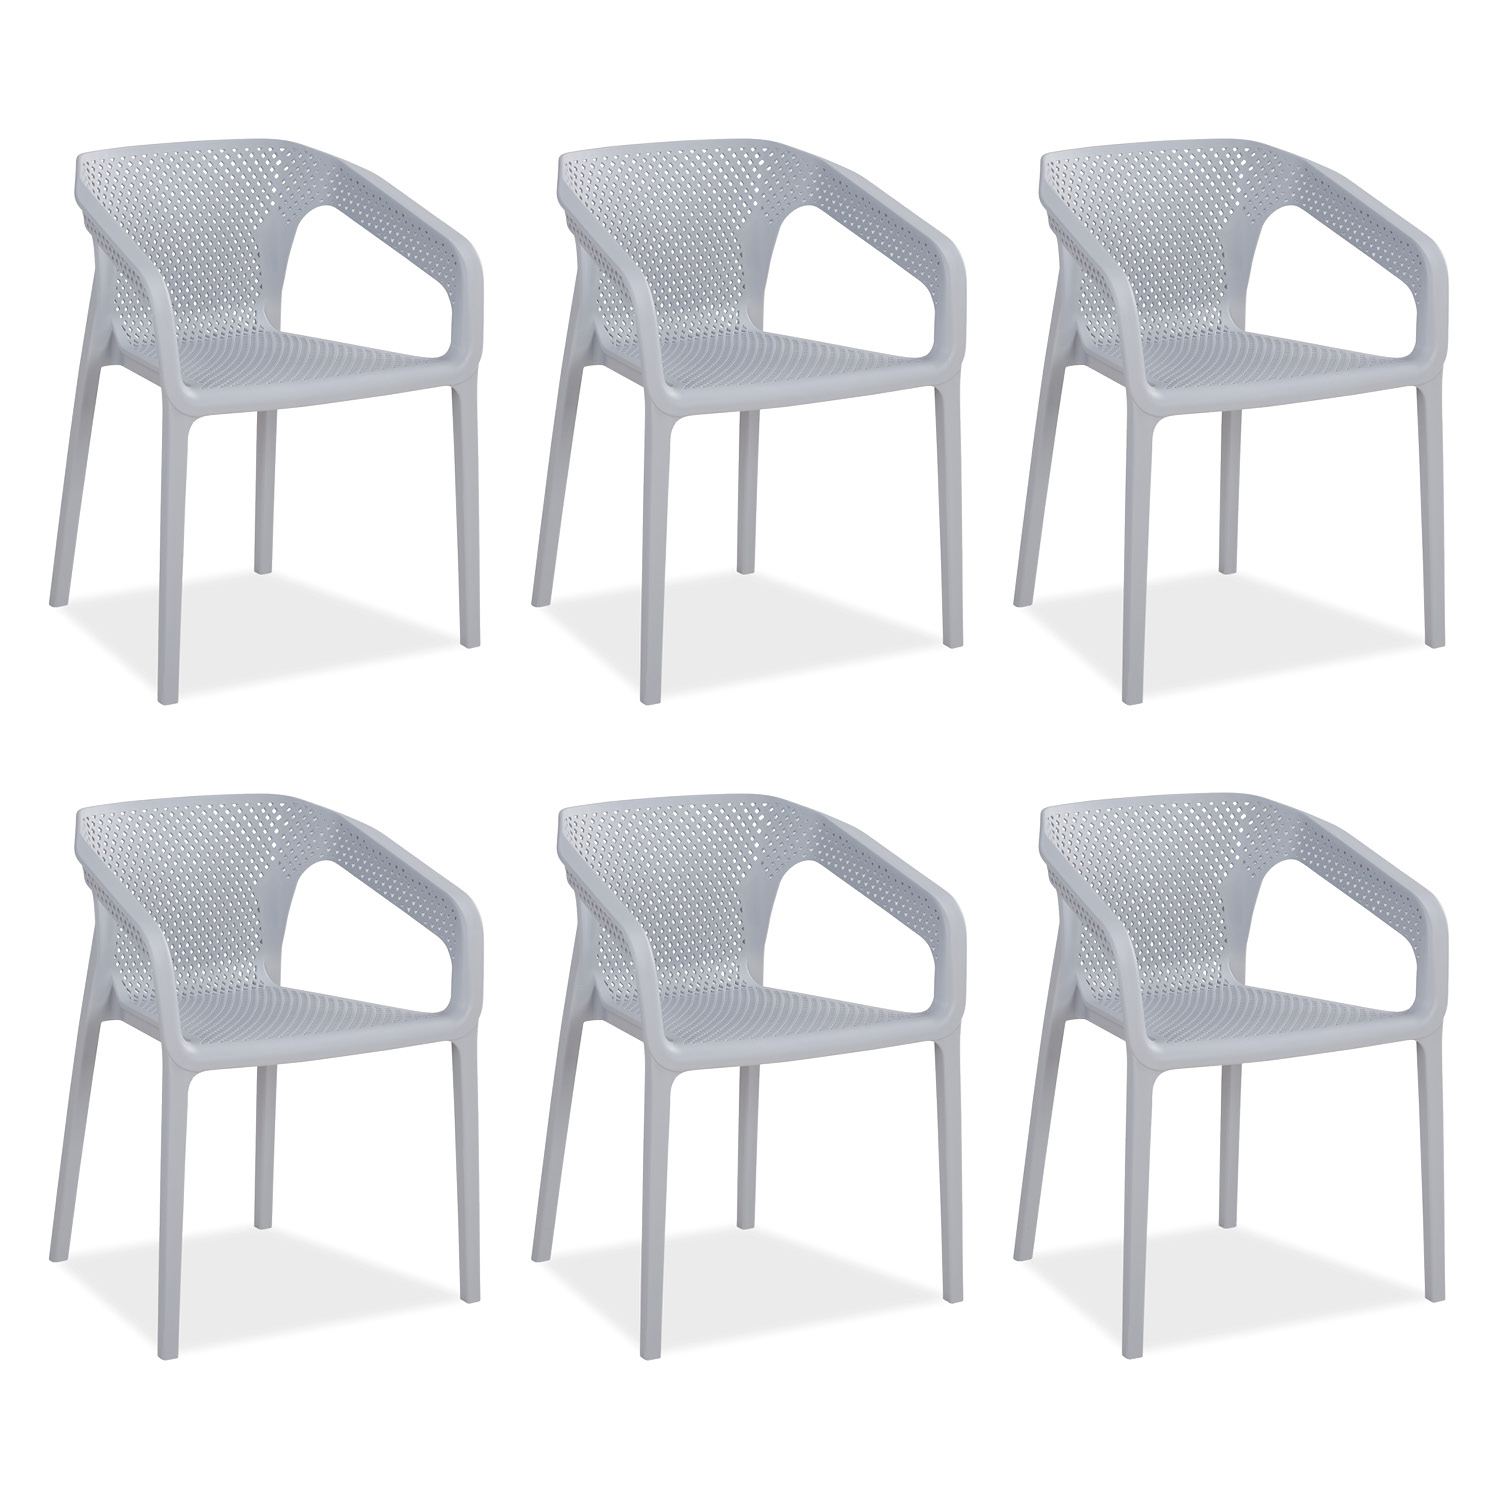 Gartenstuhl mit Armlehnen 6er Set Gartensessel Grau Stühle Kunststoff Stapelstühle Balkonstuhl Outdoor-Stuhl